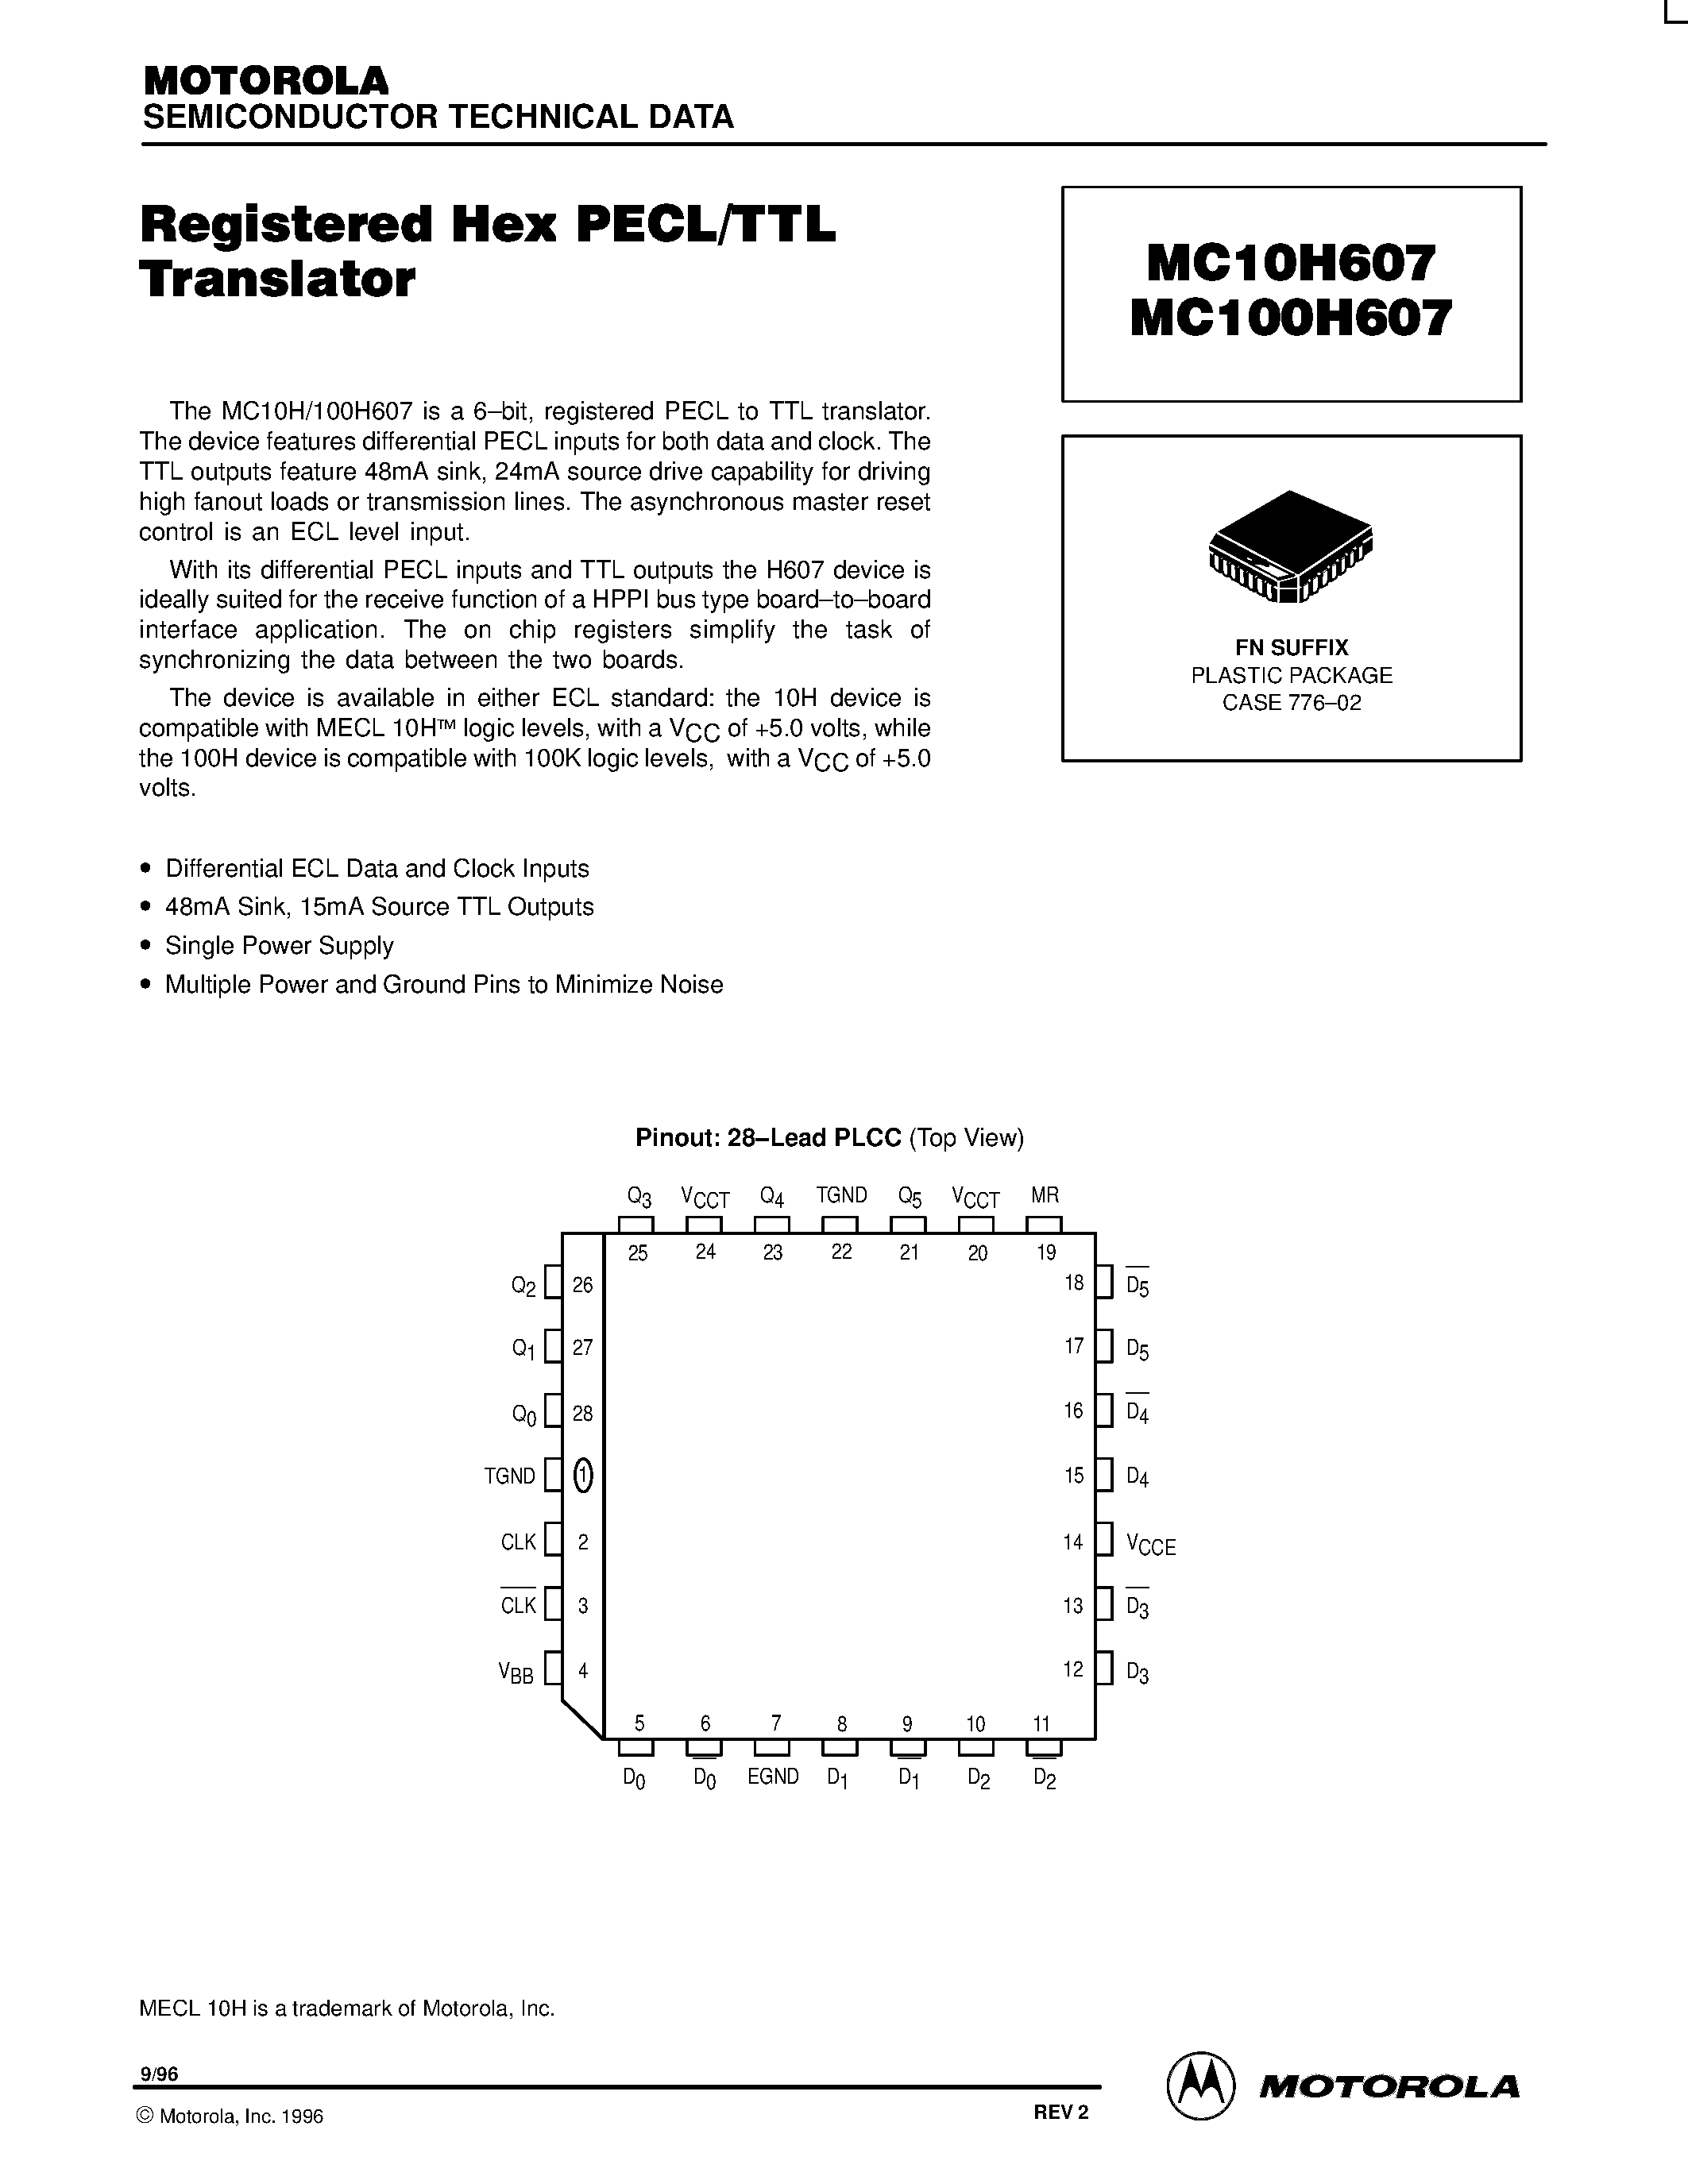 Datasheet MC10H607 - Registered Hex PECL/TTL Translator page 1